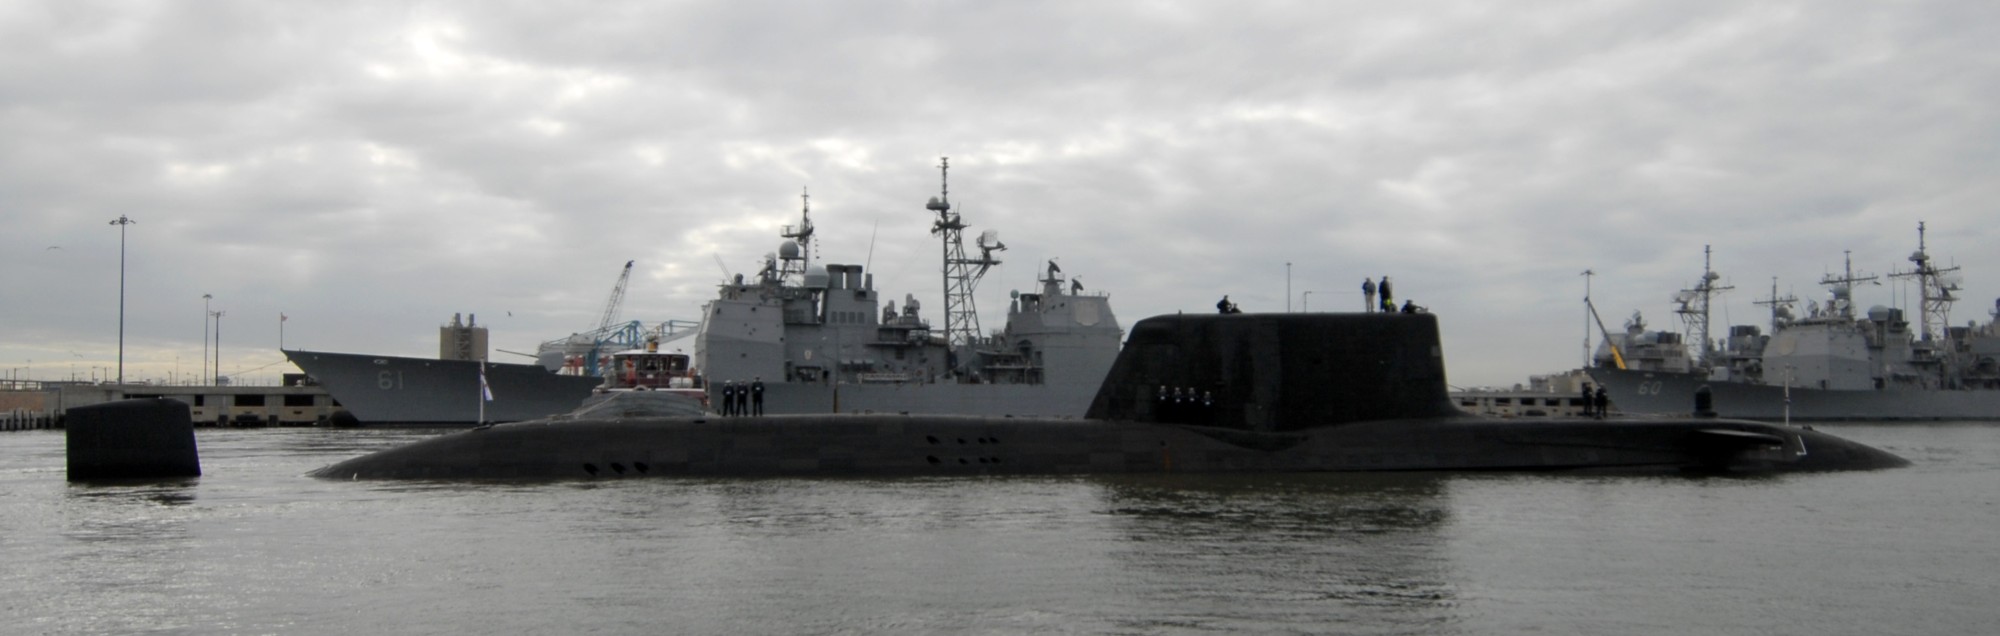 s-119 hms astute attack submarine royal navy 03